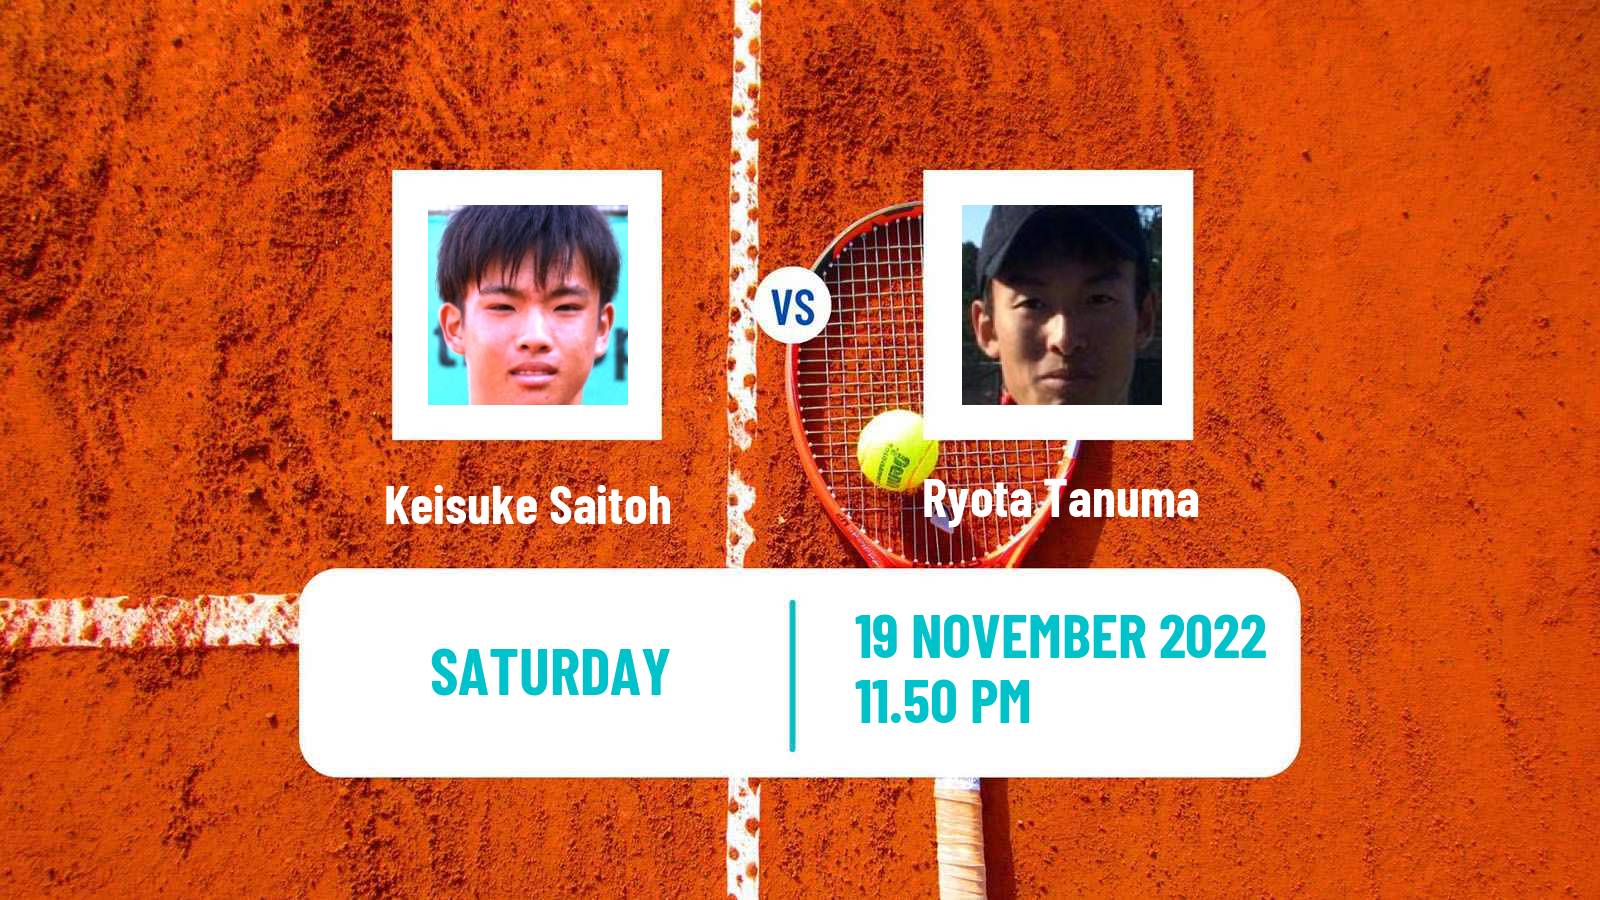 Tennis ATP Challenger Keisuke Saitoh - Ryota Tanuma